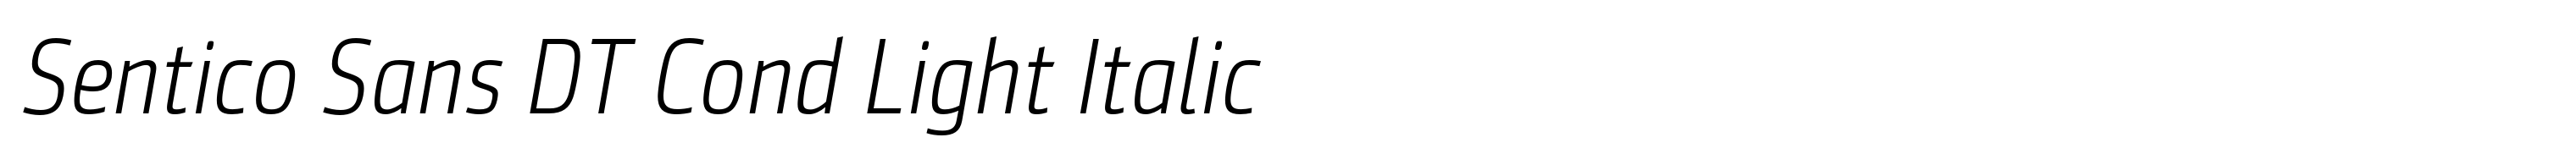 Sentico Sans DT Cond Light Italic